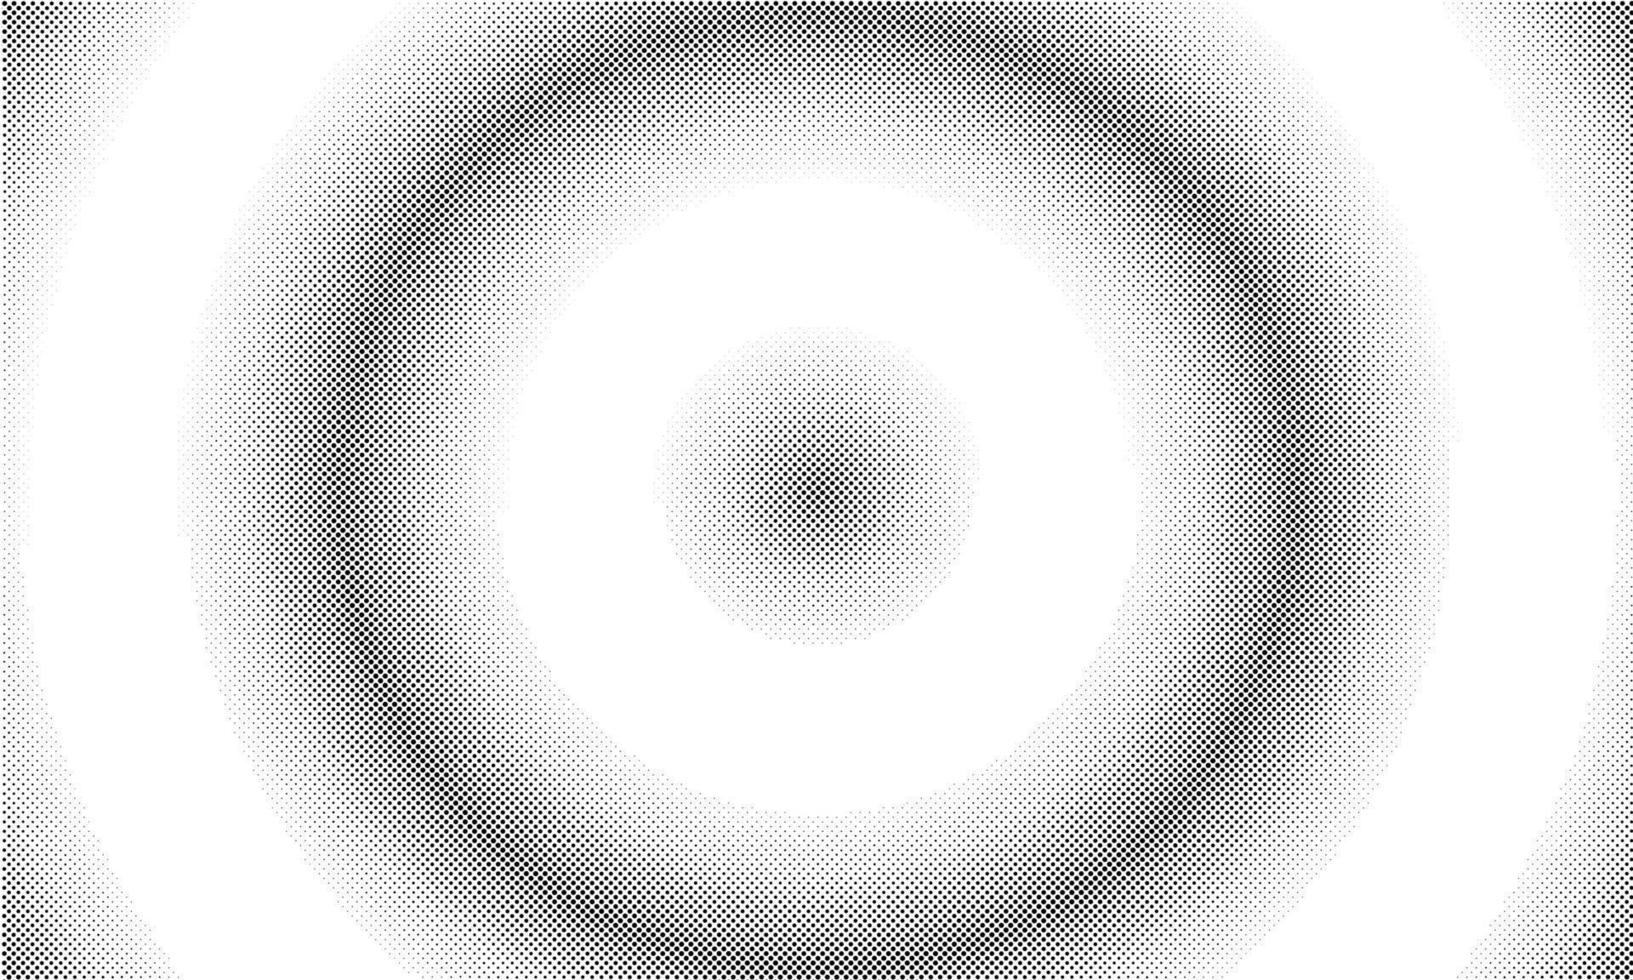 radial Halbton Textur Muster Hintergrund, radial Gradation Punkte horizontal Hintergrund vektor